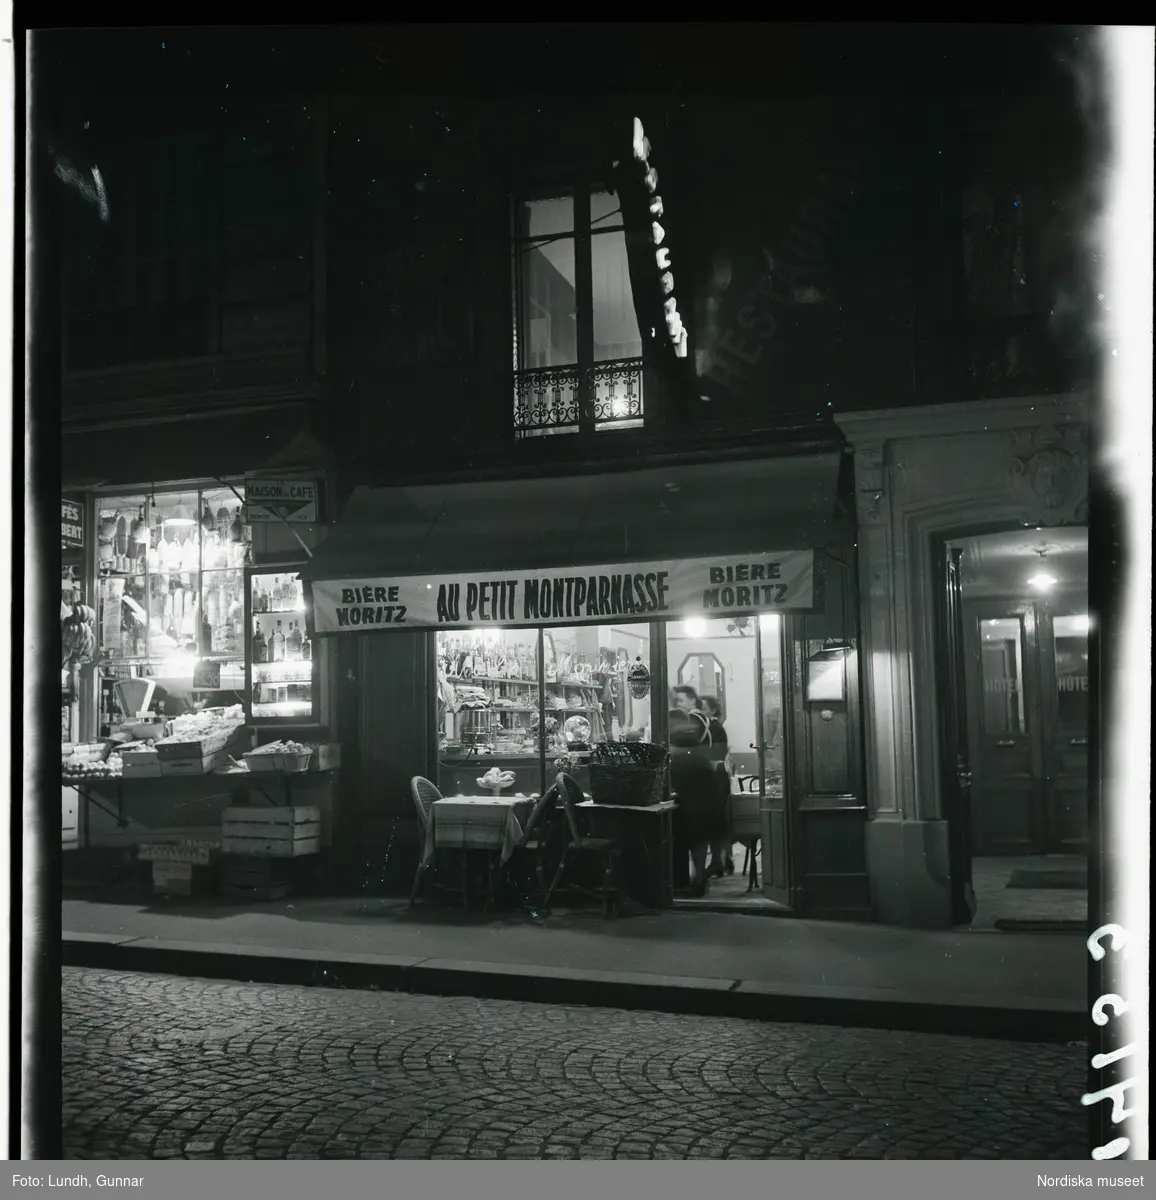 1950. Paris. Butik "Au petit Montparnasse" Exteriör